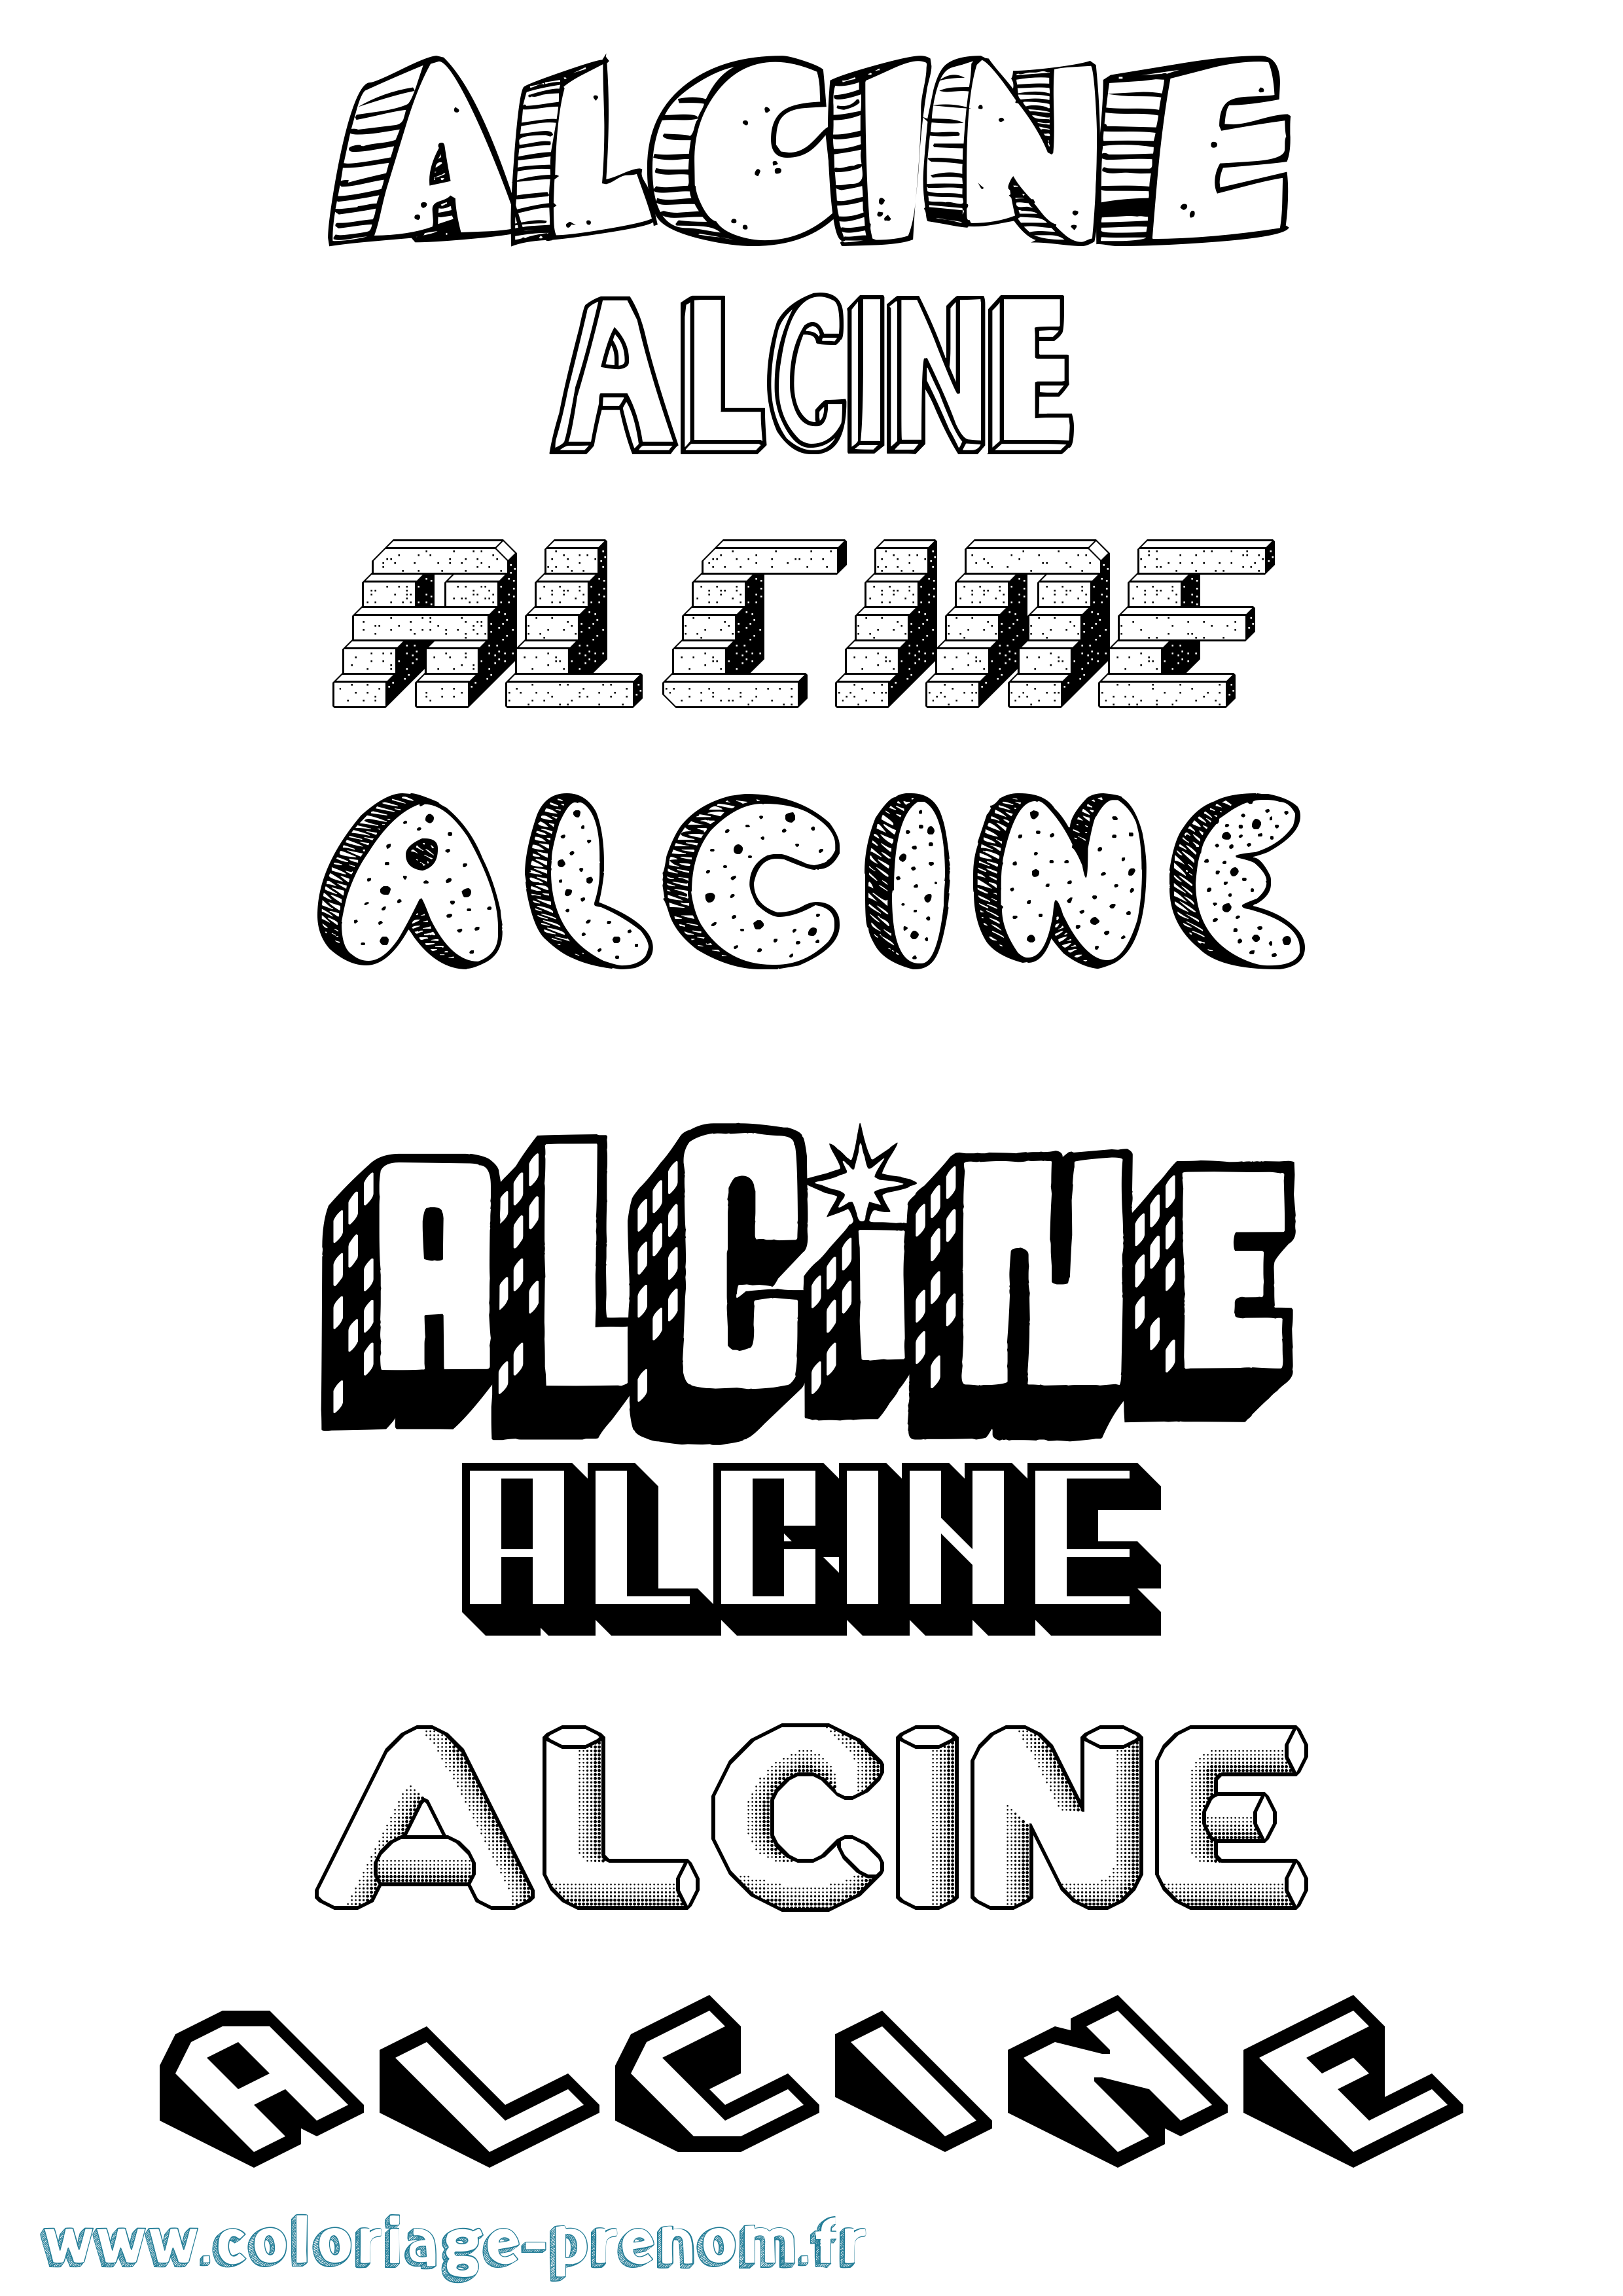 Coloriage prénom Alcine Effet 3D